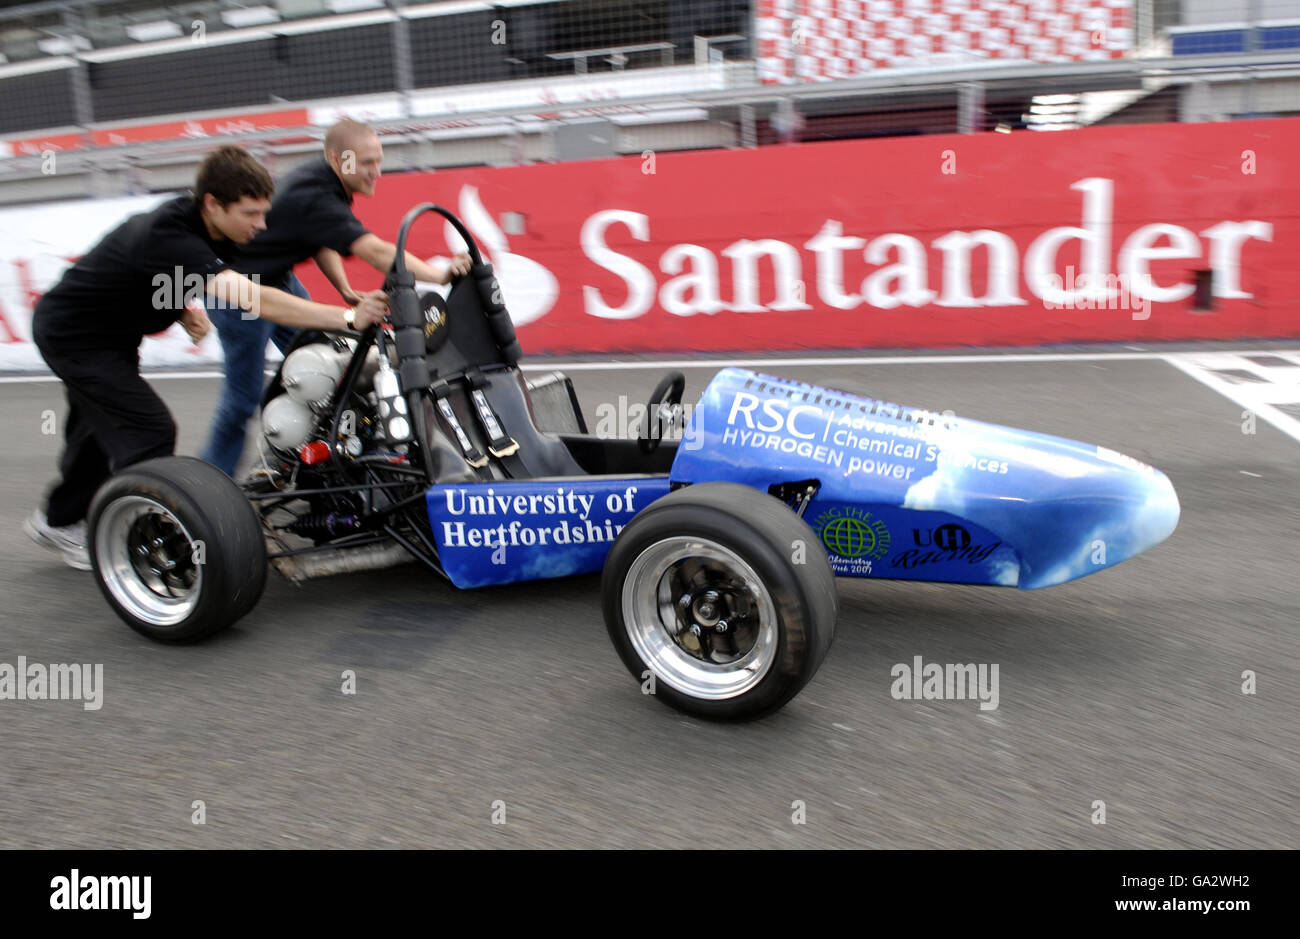 Hydrogen powered race car Stock Photo